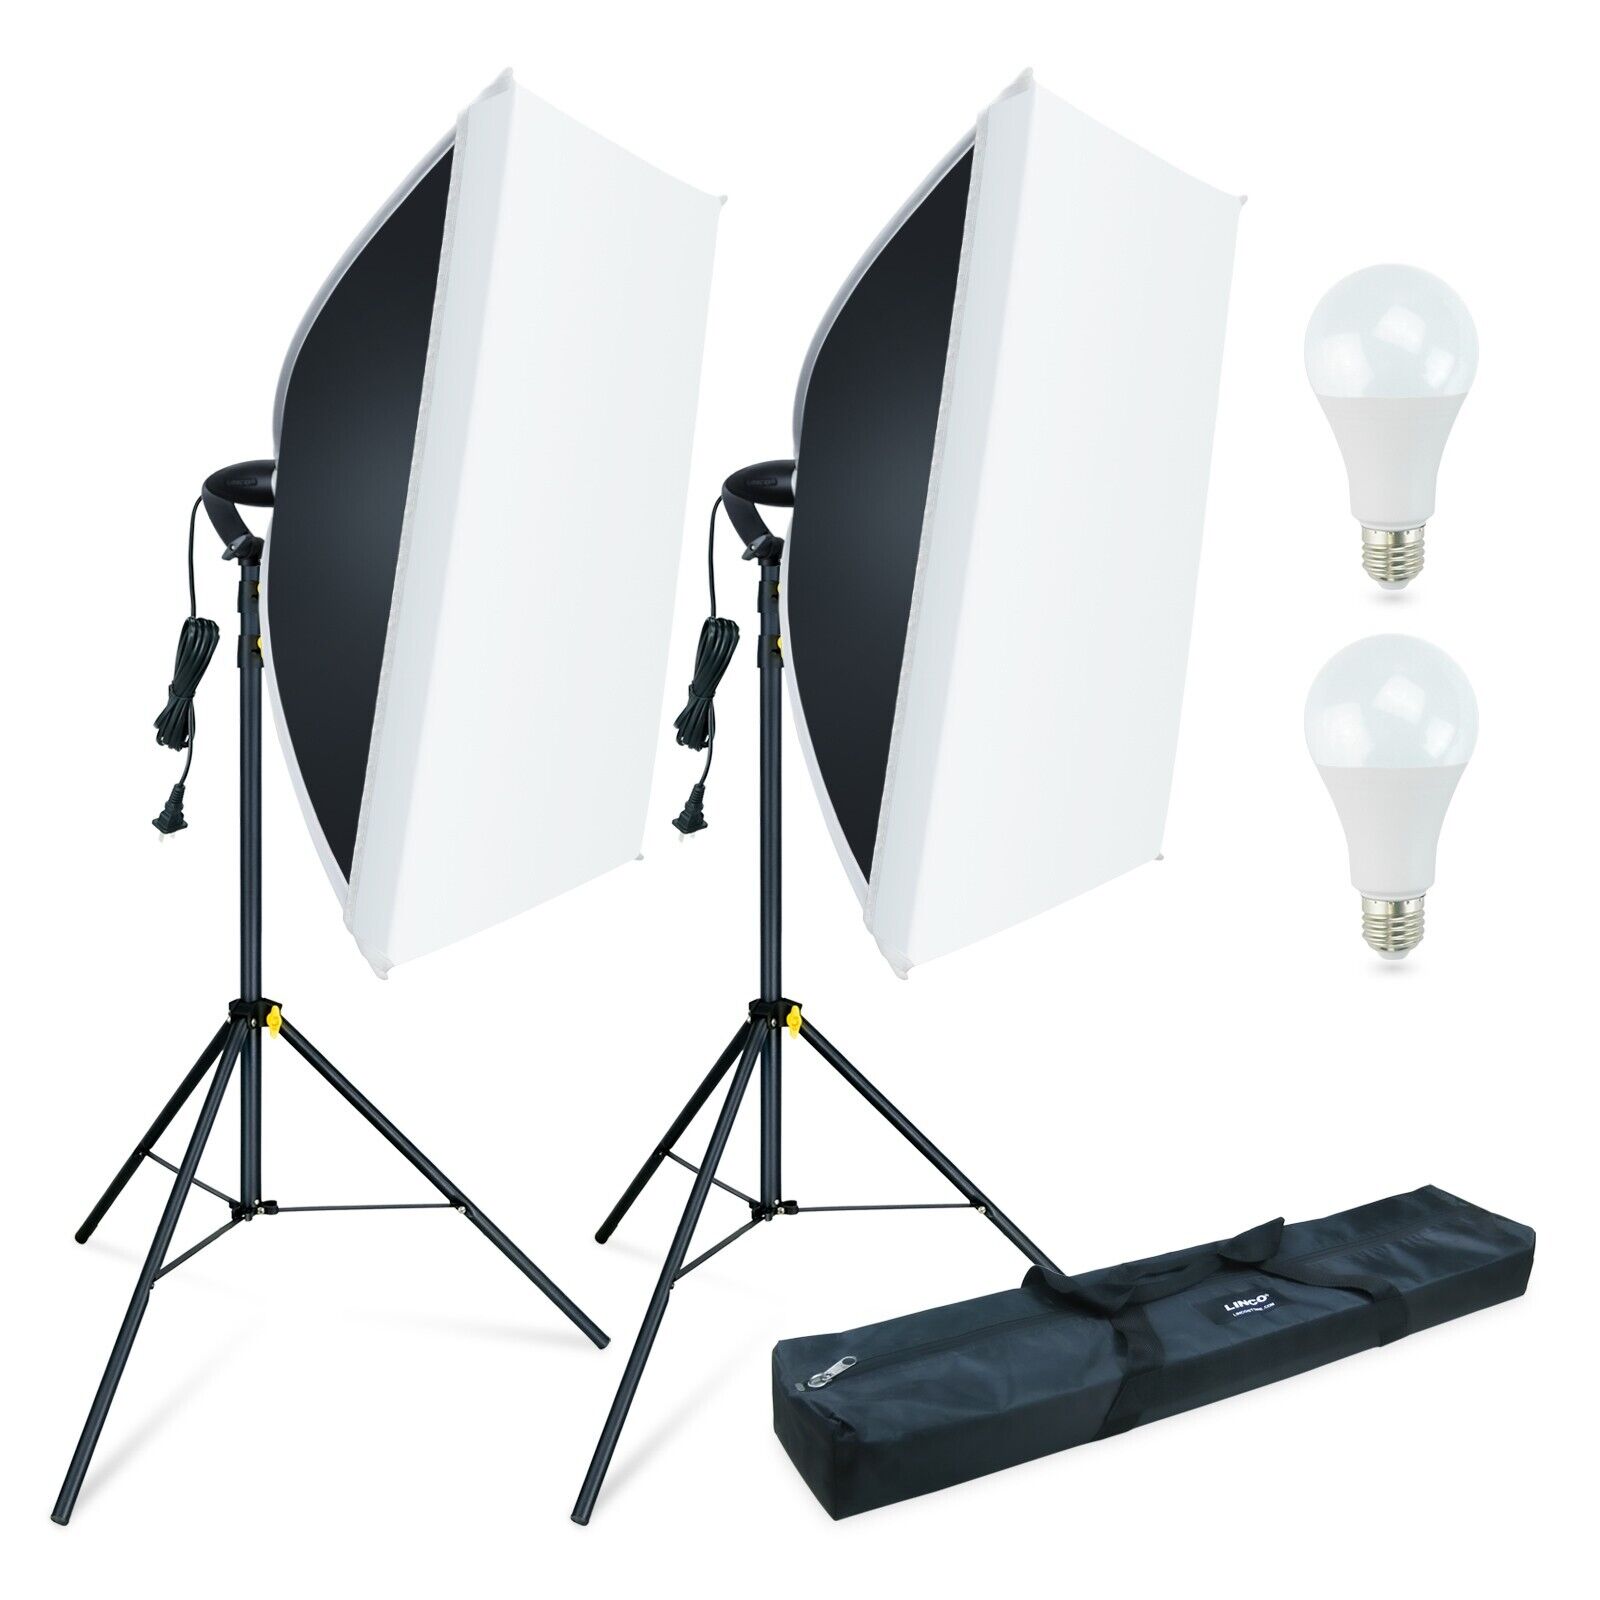 LINCO 2 Softbox Light Kit Photo Studio Photography Continuous Lighting Stand Set